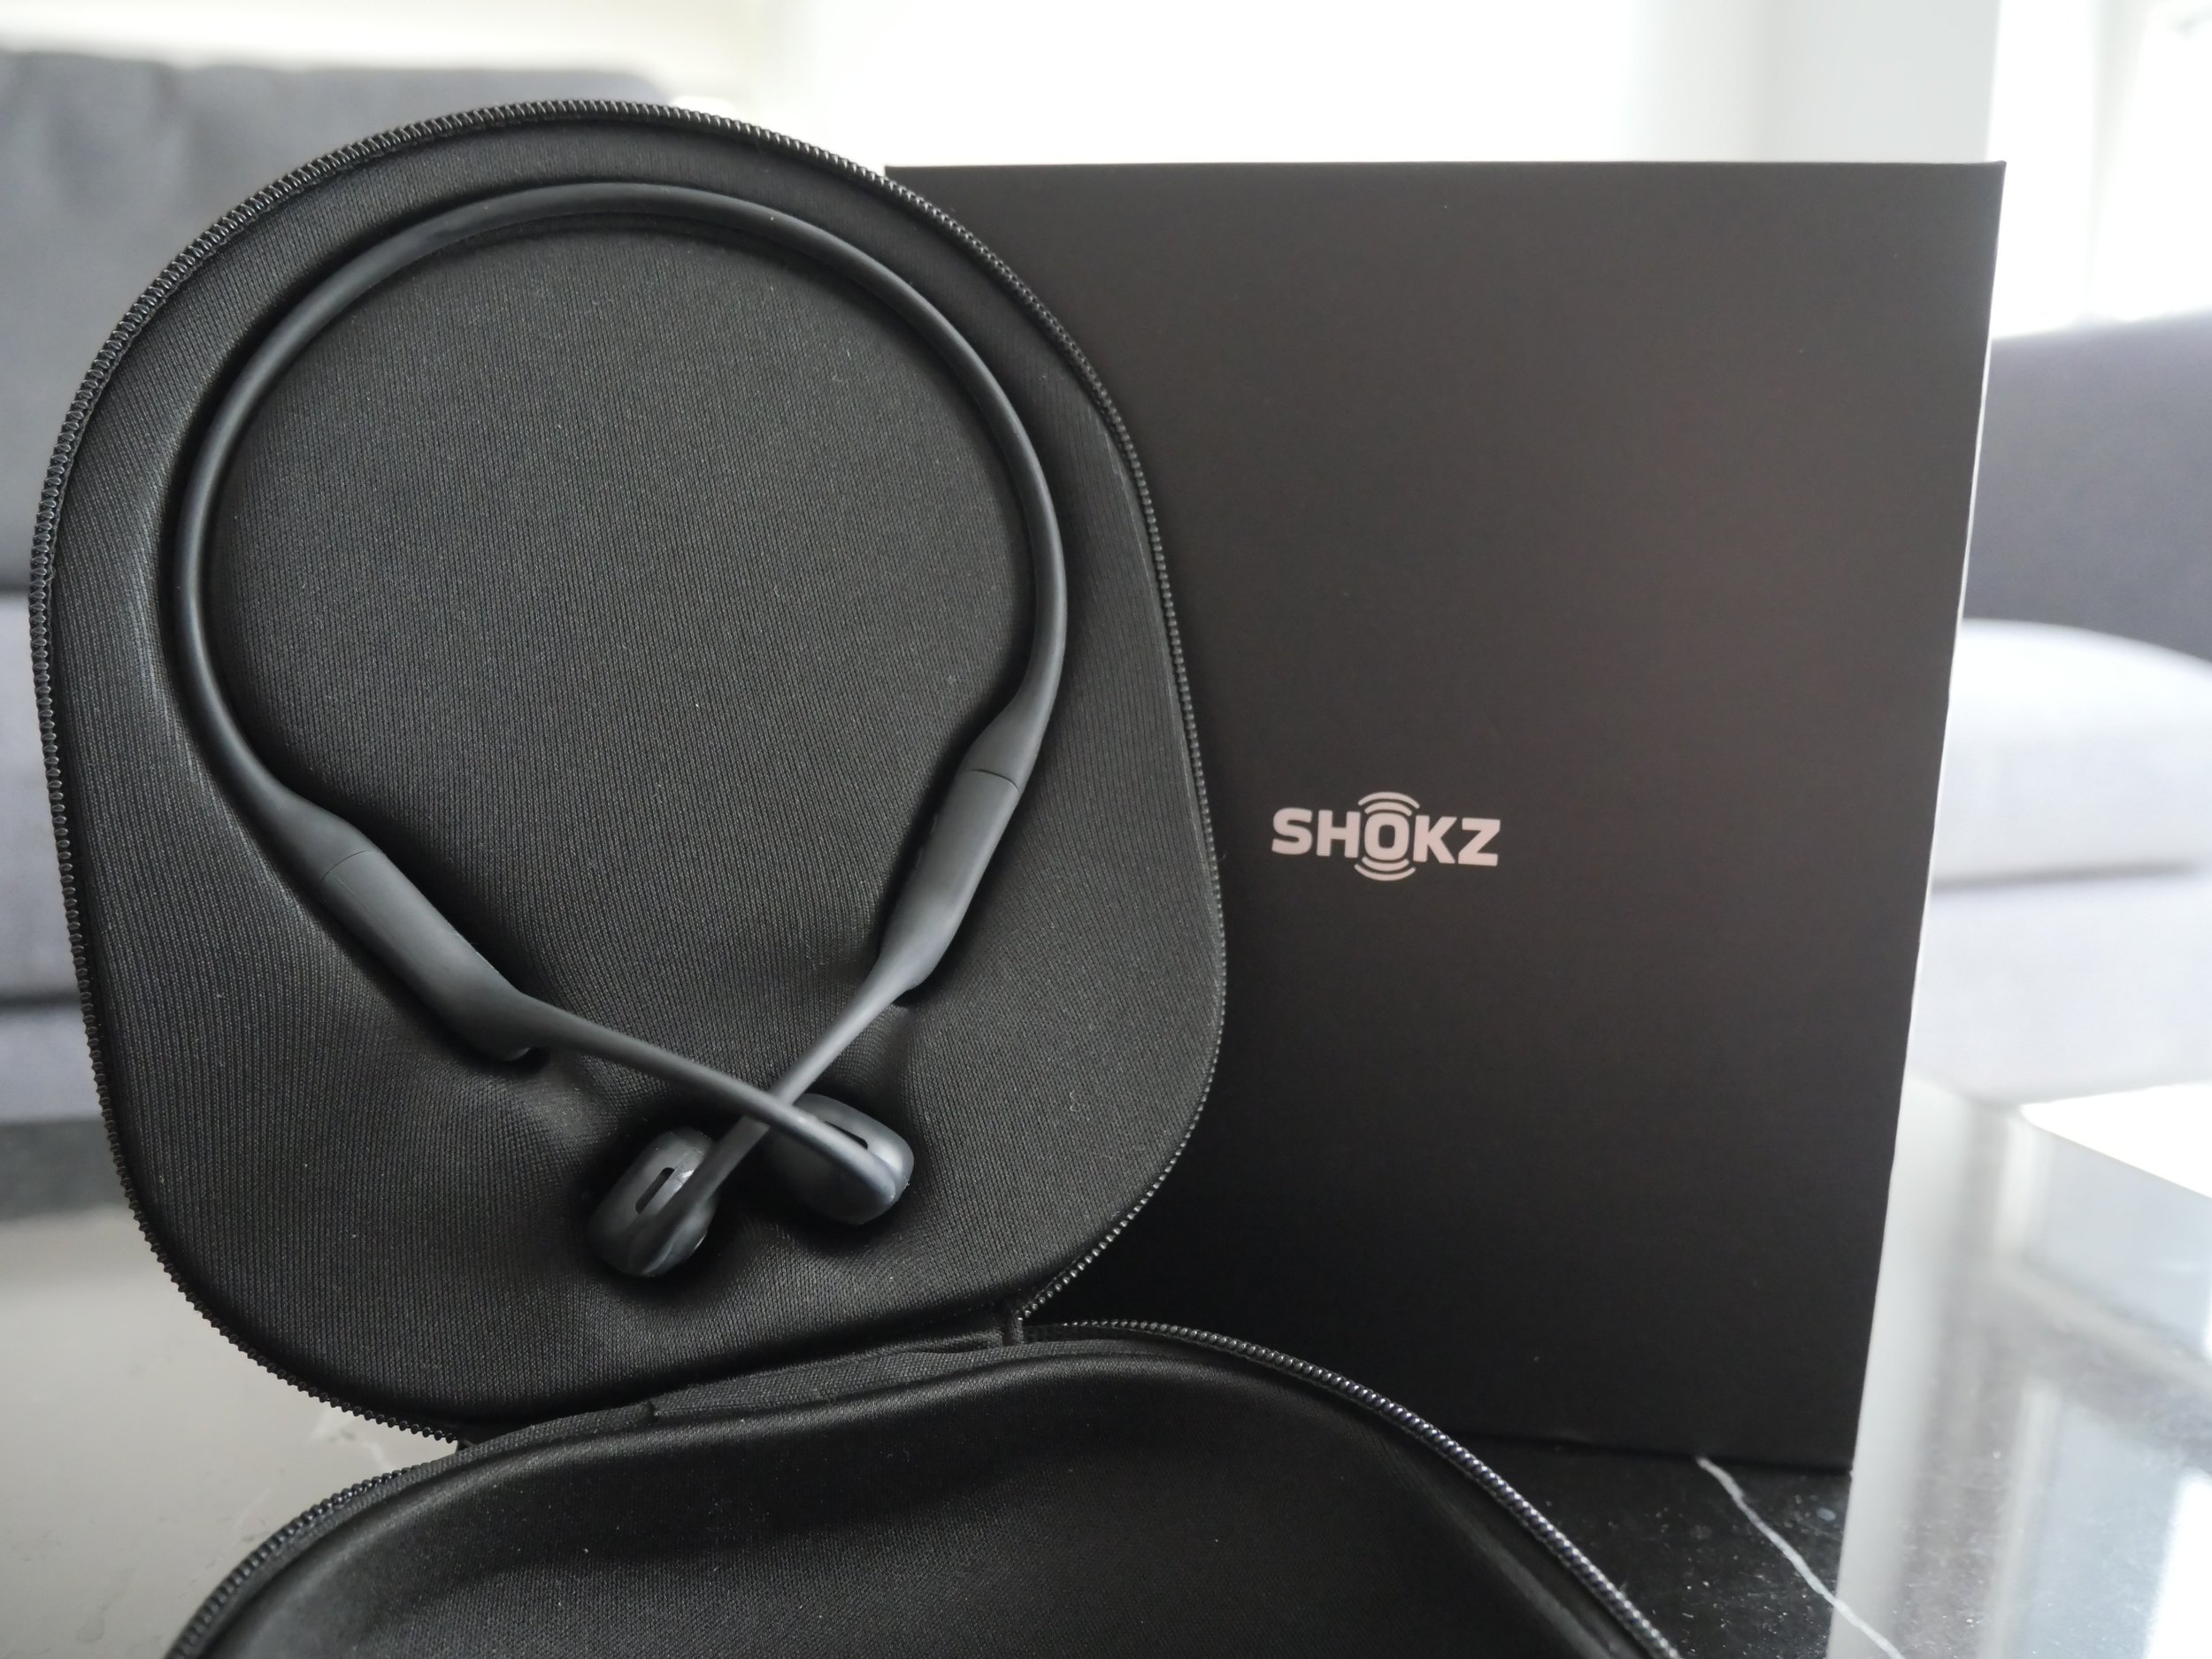 Shokz Bone Conduction Headphones Review